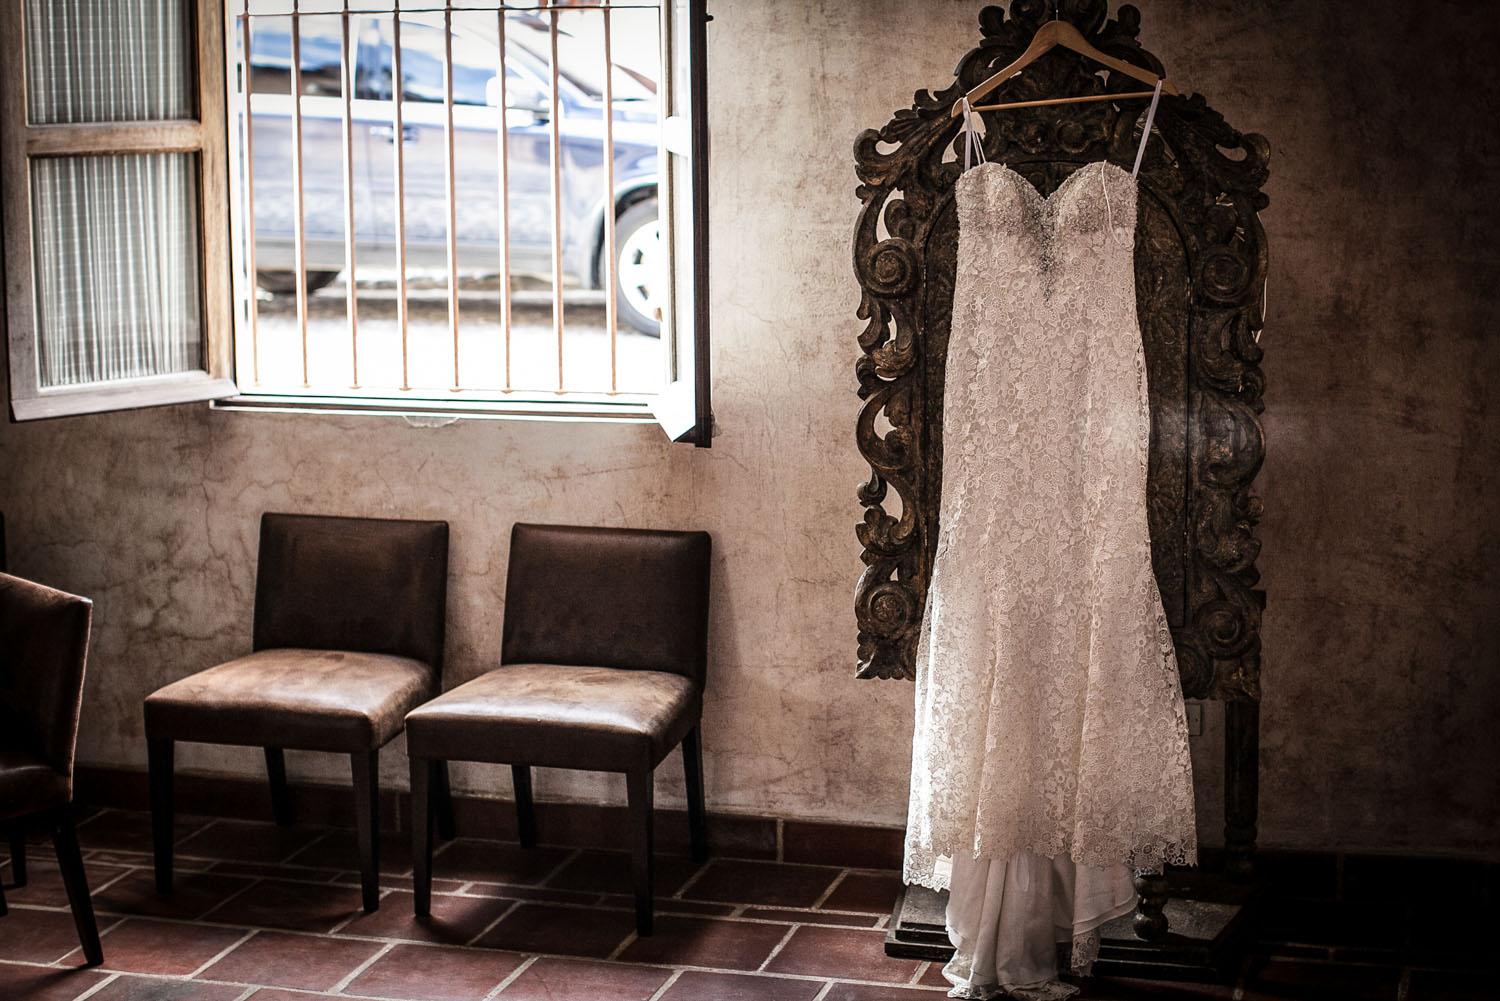 Antigua Guatemala Wedding Photography